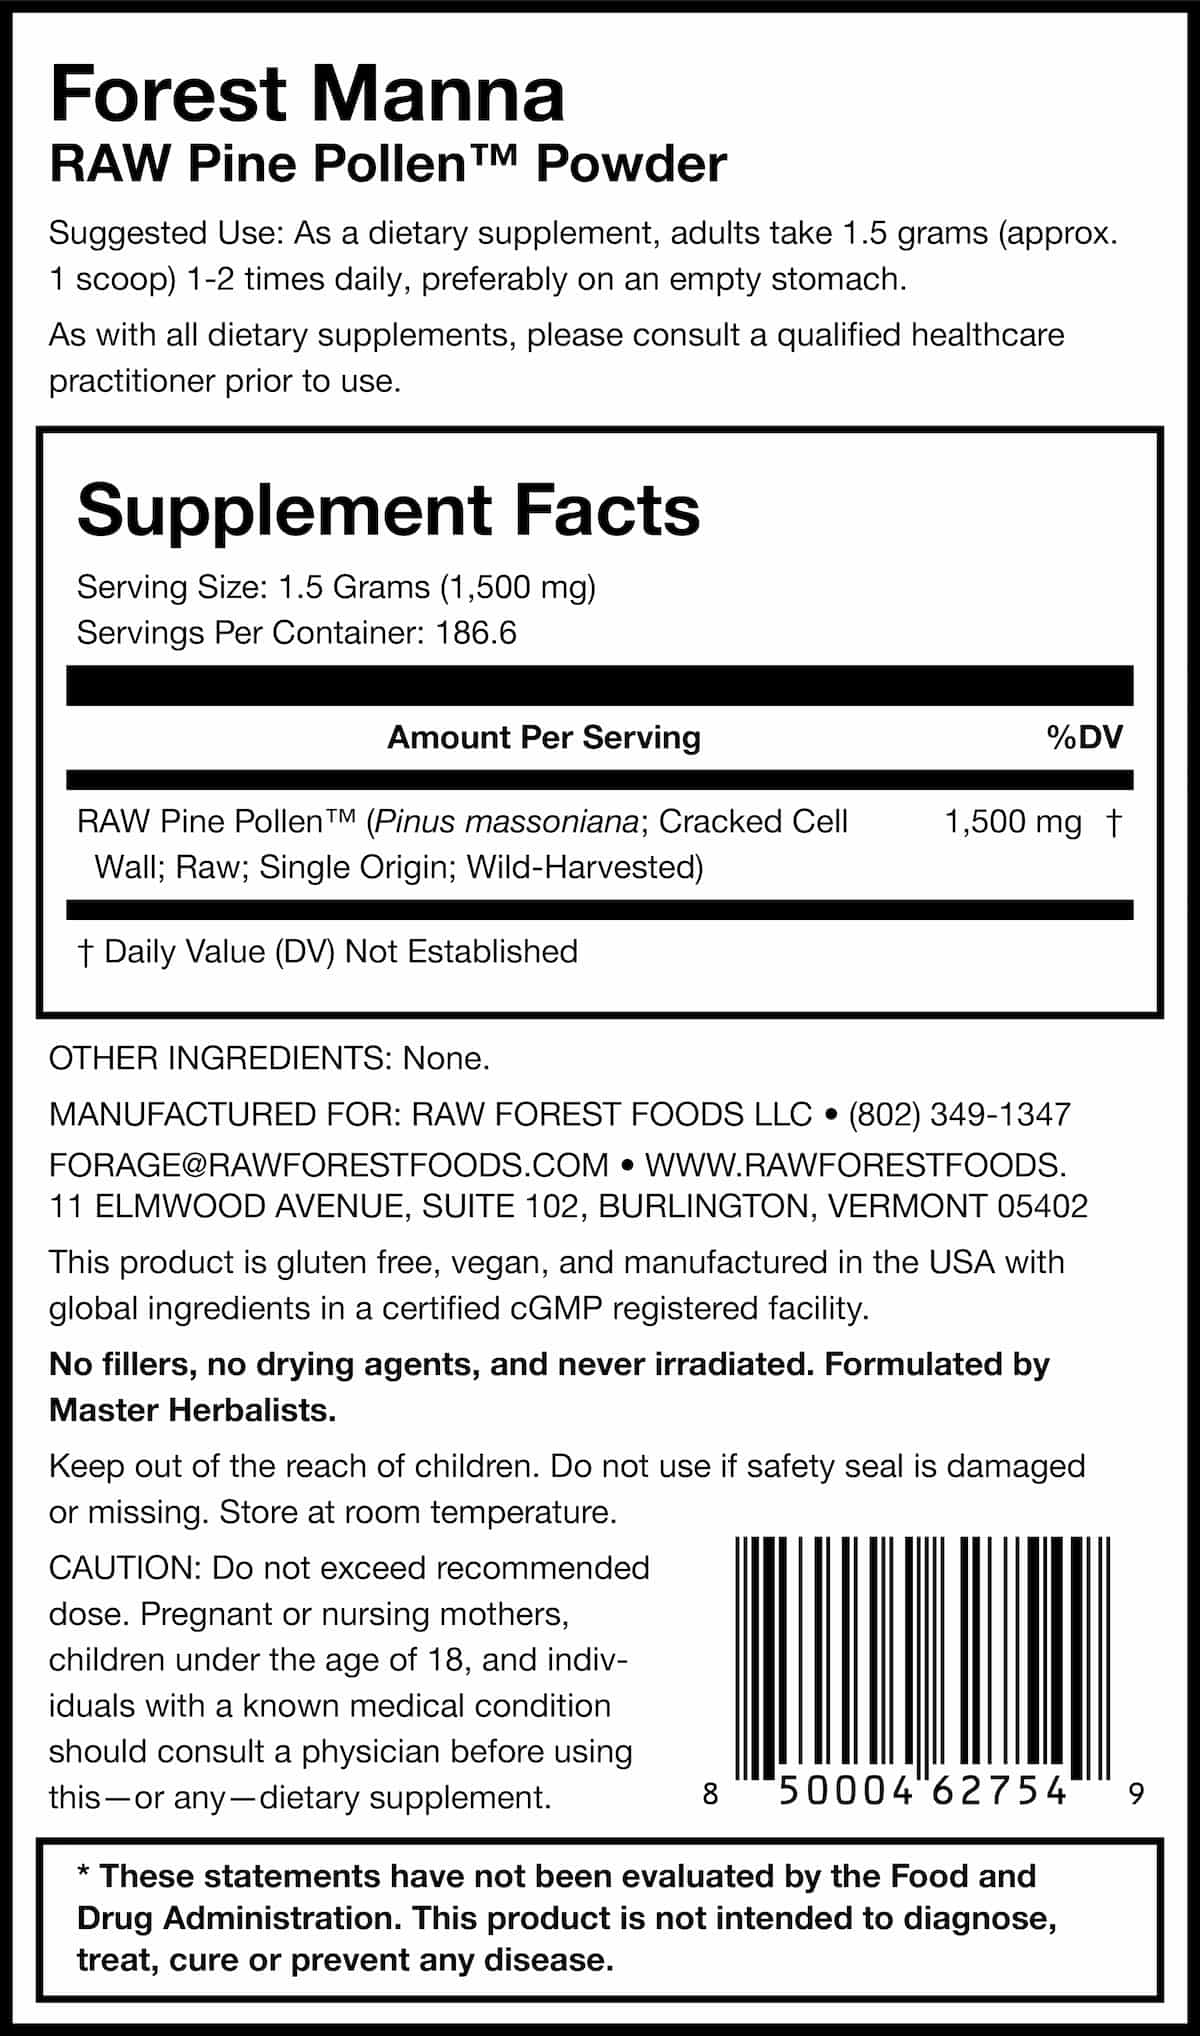 Forest Manna RAW Pine Pollen Powder Supplement 280 Grams Facts Panel